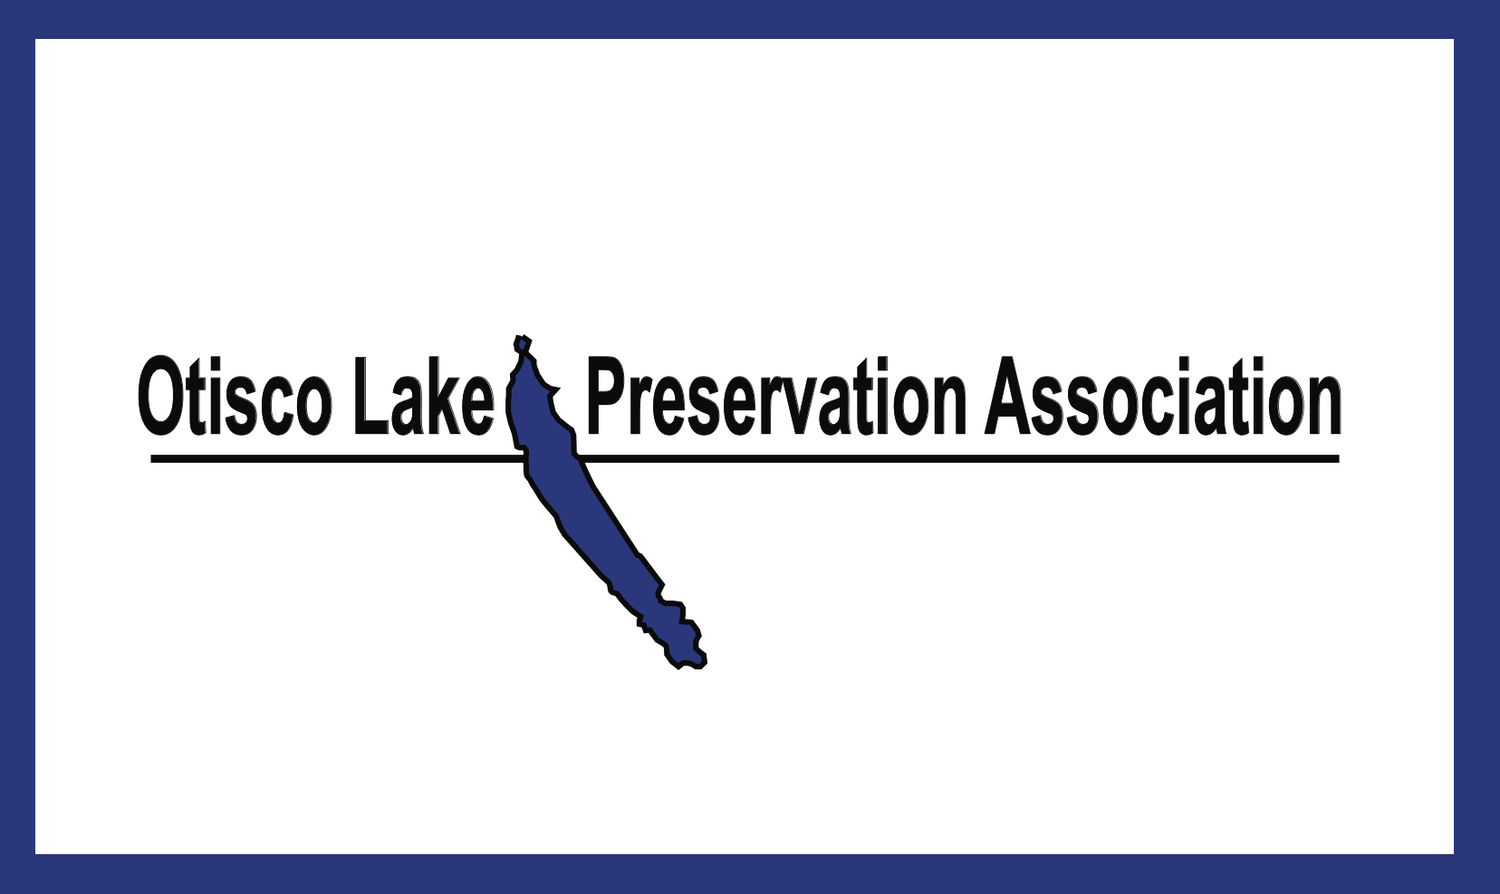 Otisco Lake Preservation Association